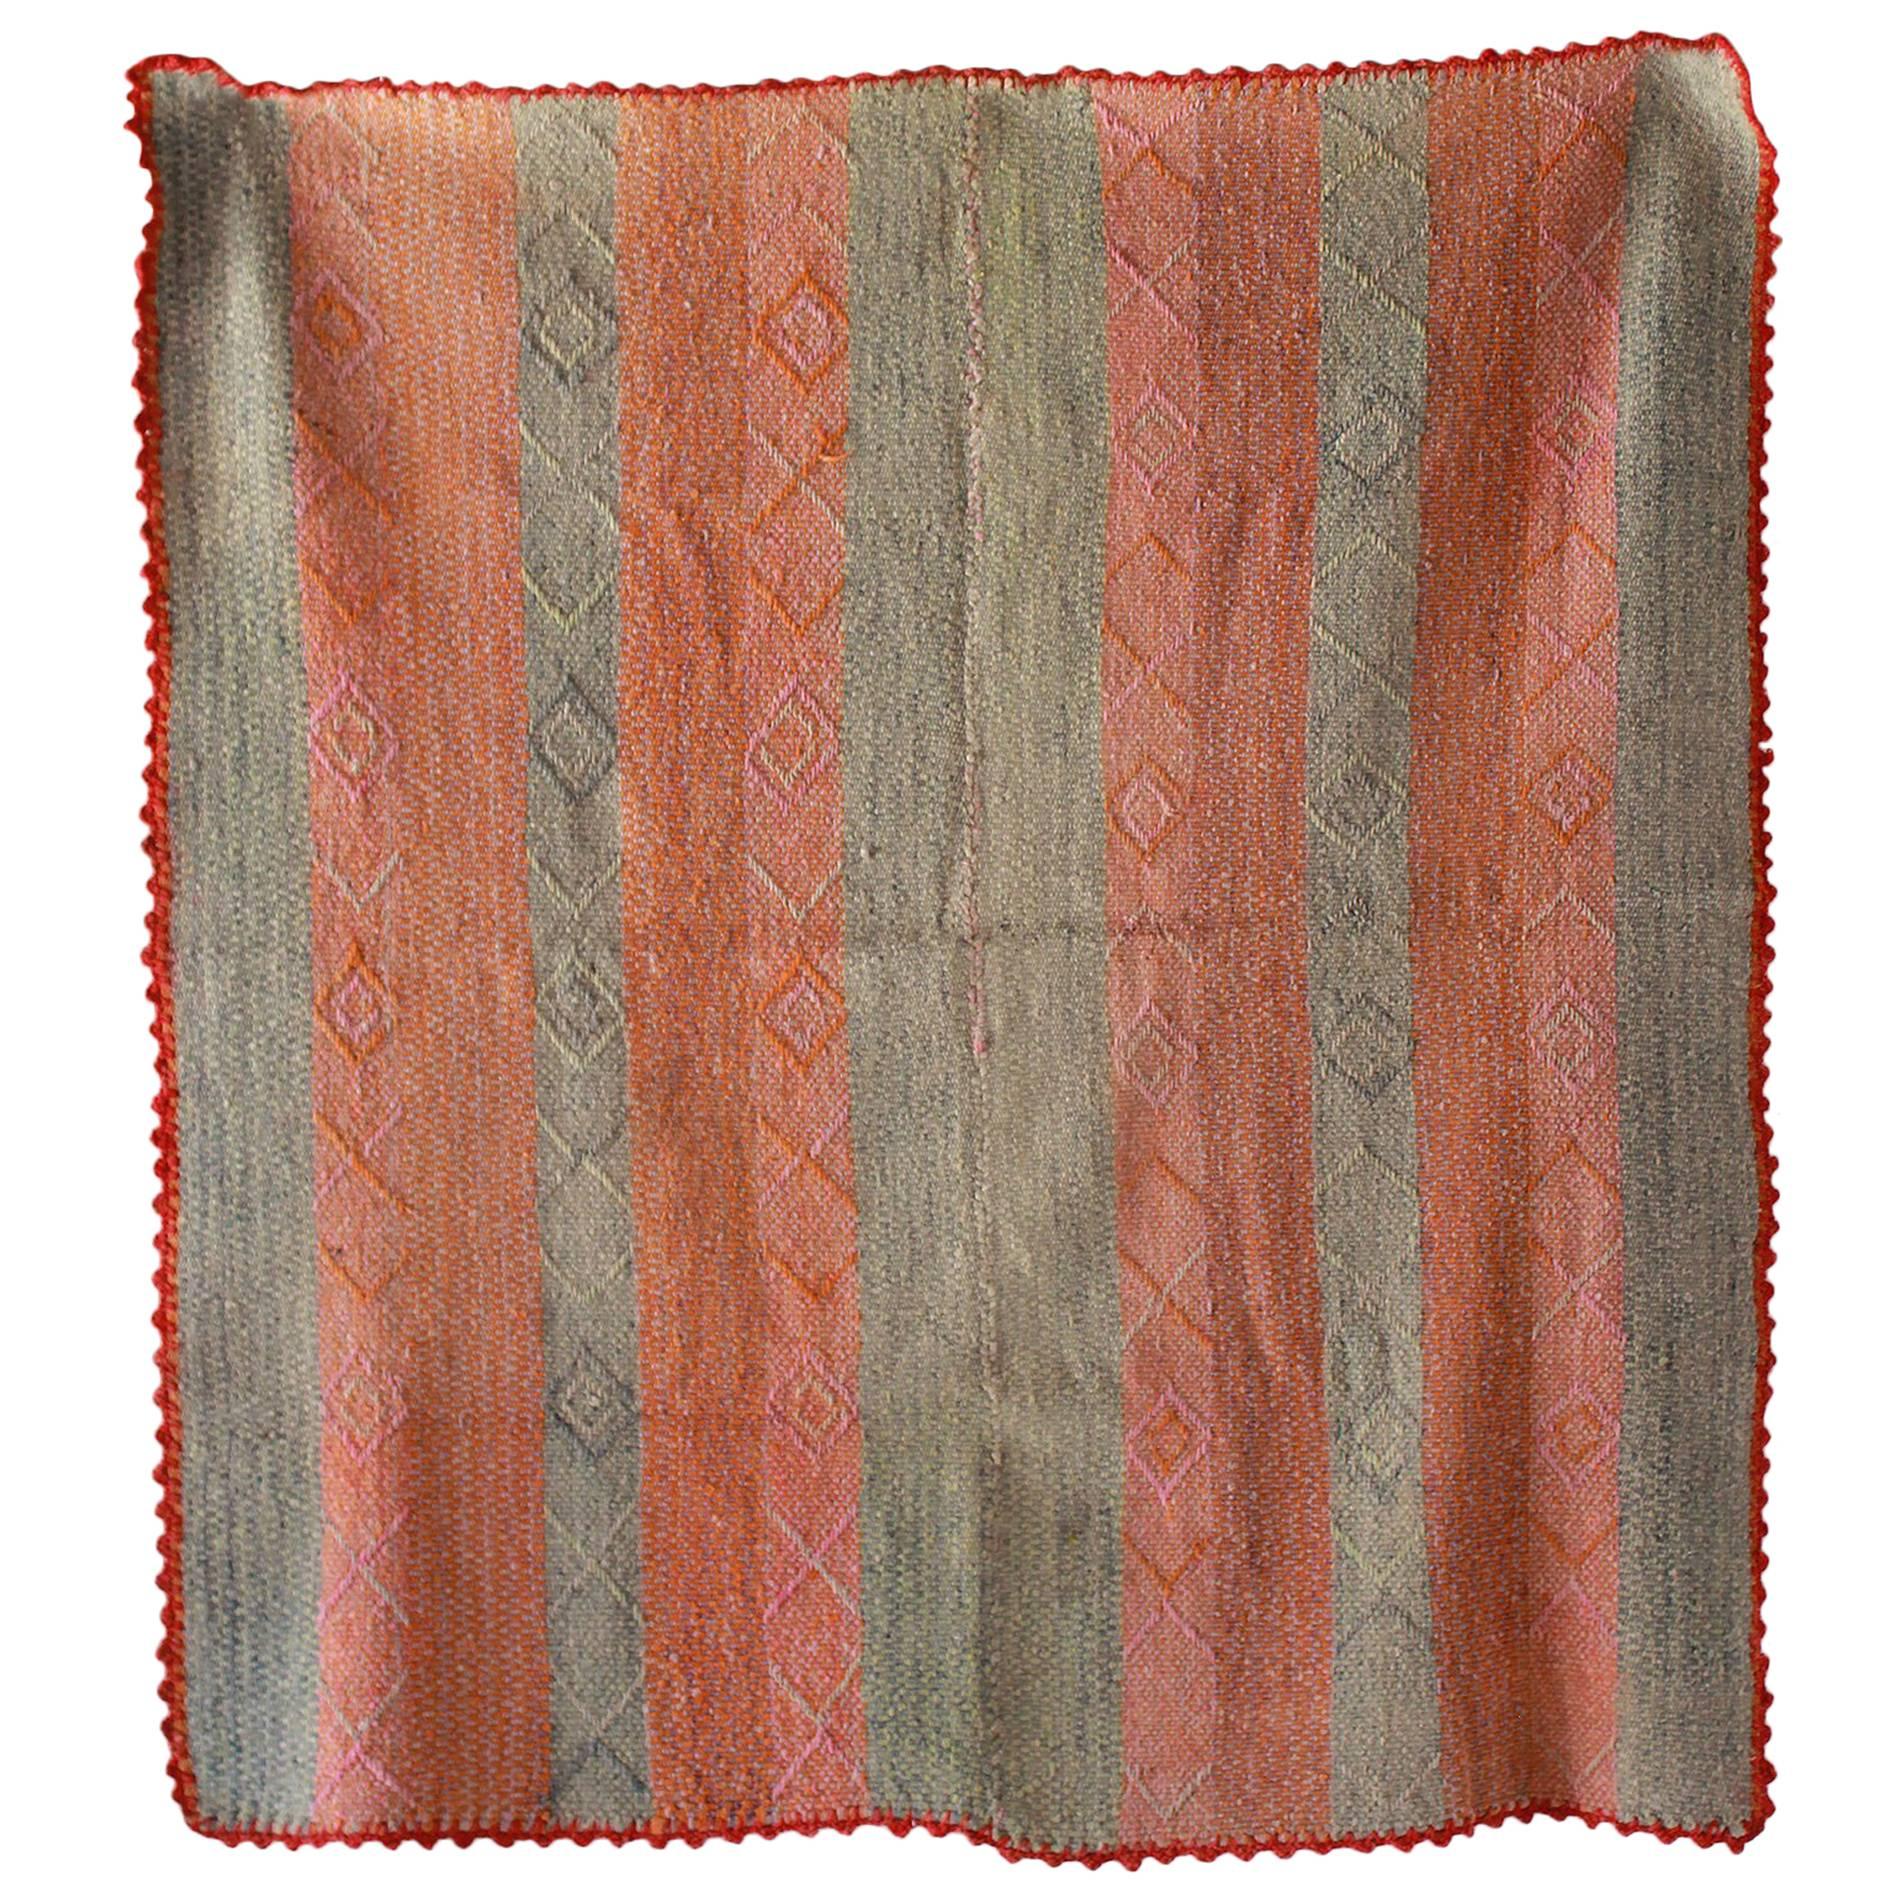 Peruvian Striped Orange Pink and Sage Colored Cuzco Wool Textile